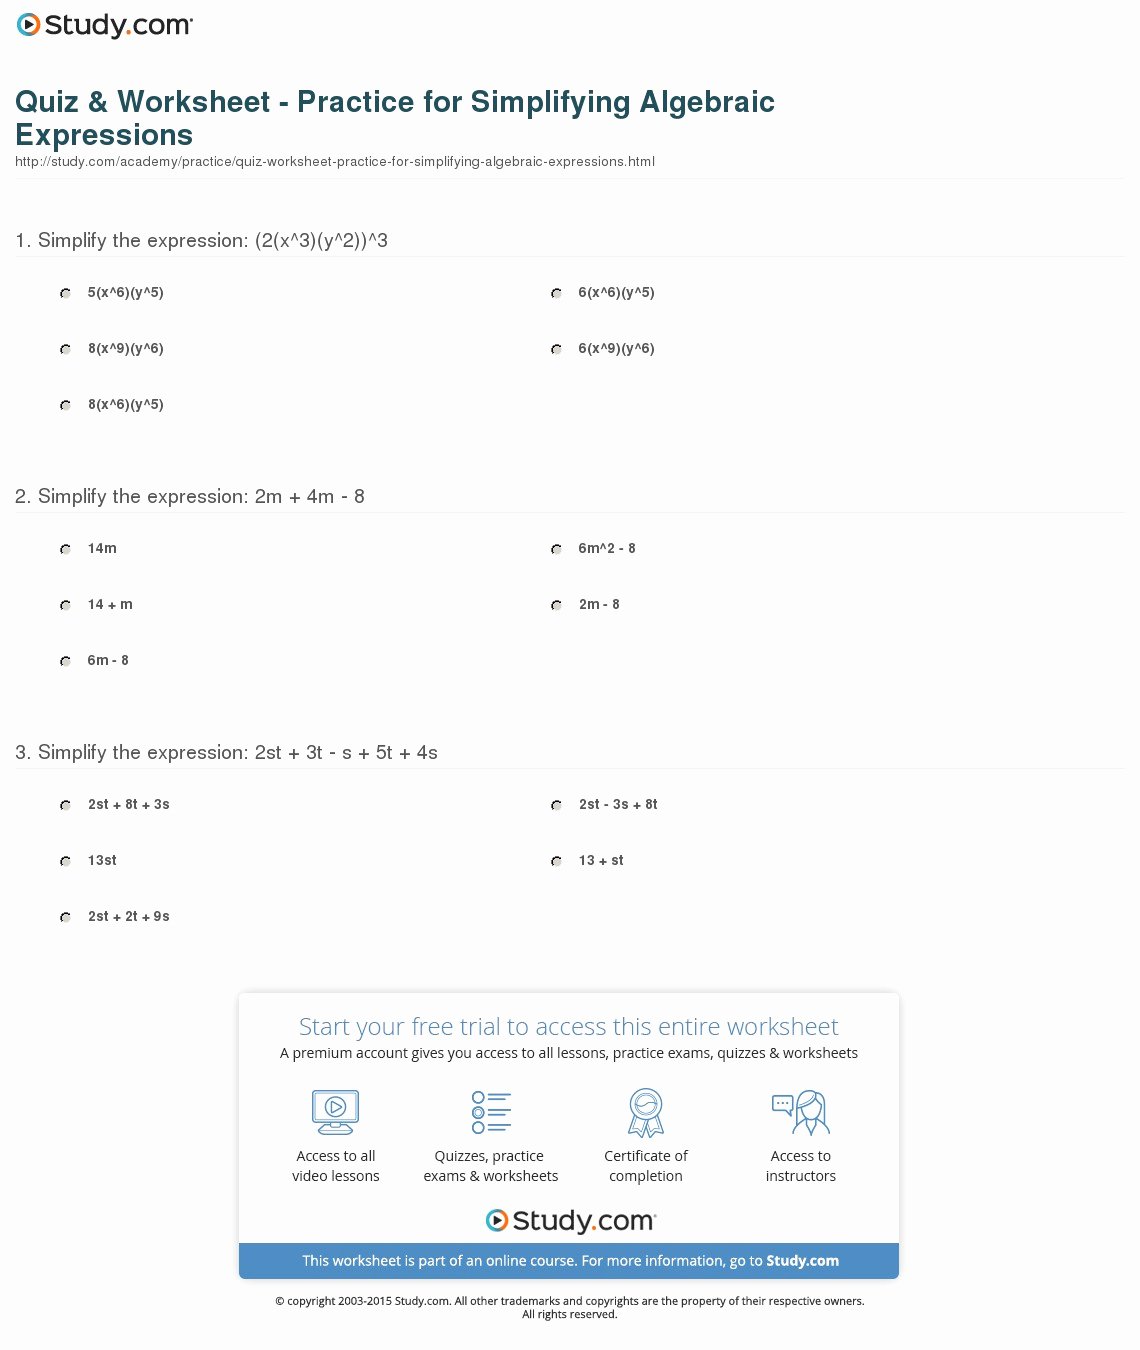 Simplifying Algebraic Expressions Worksheet Answers Inspirational Quiz &amp; Worksheet Practice for Simplifying Algebraic